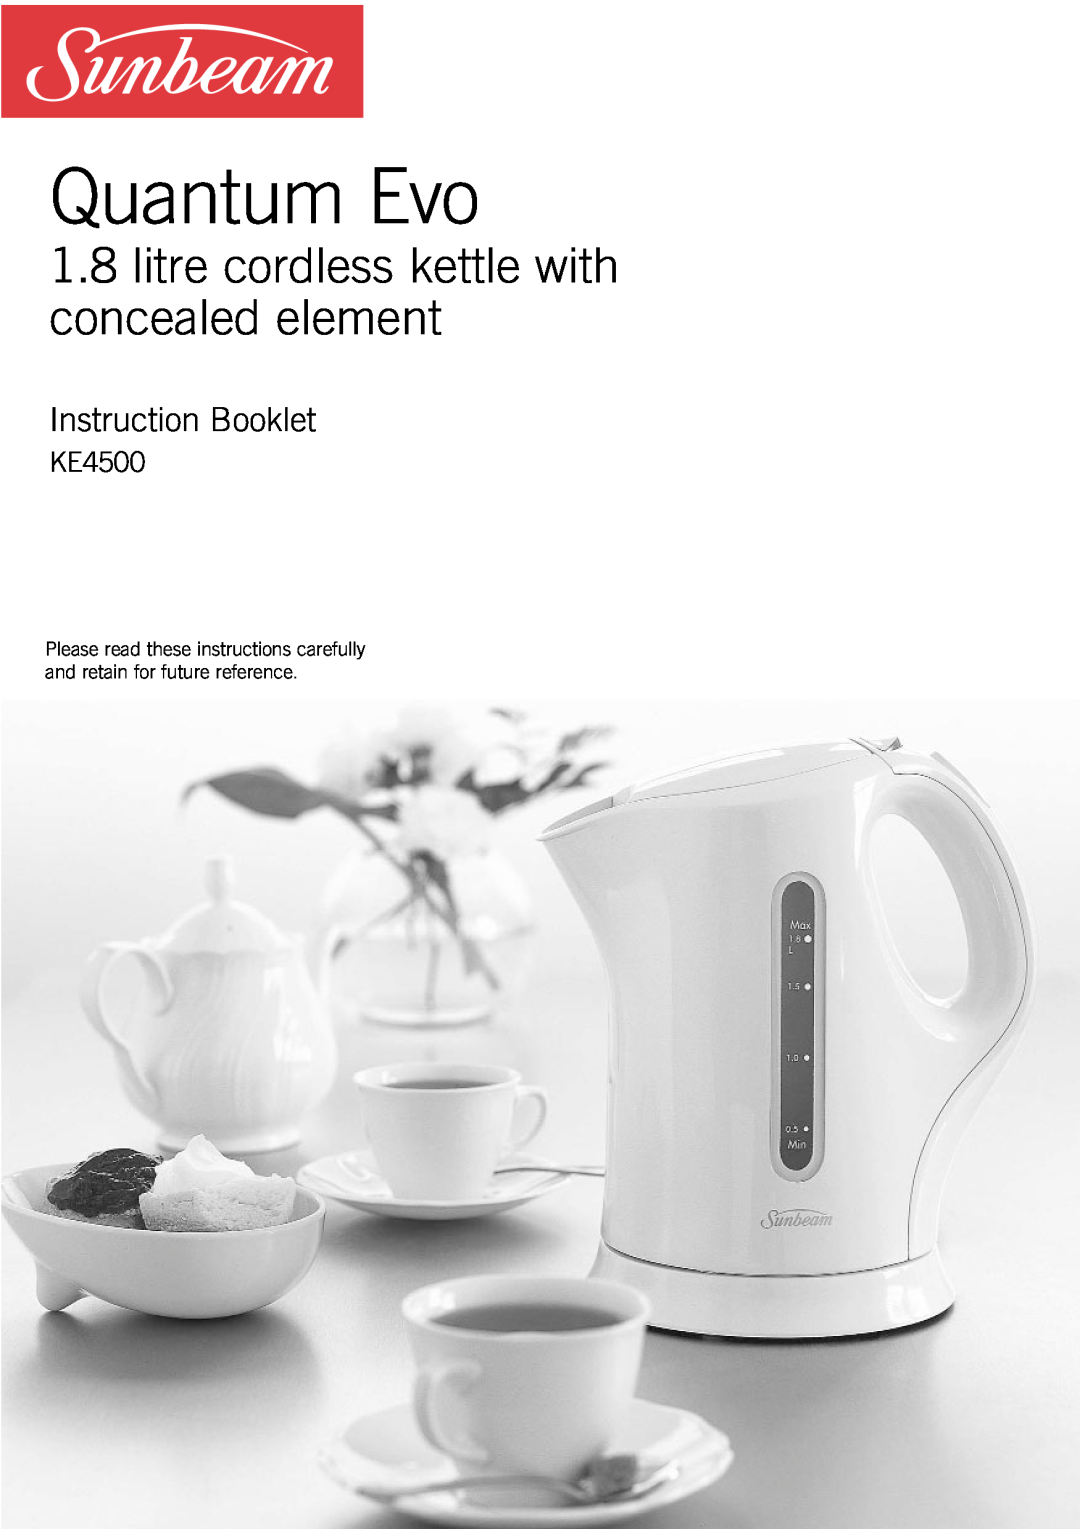 Sunbeam KE4500 manual Quantum Evo, 1.8litre cordless kettle with concealed element, Instruction Booklet 